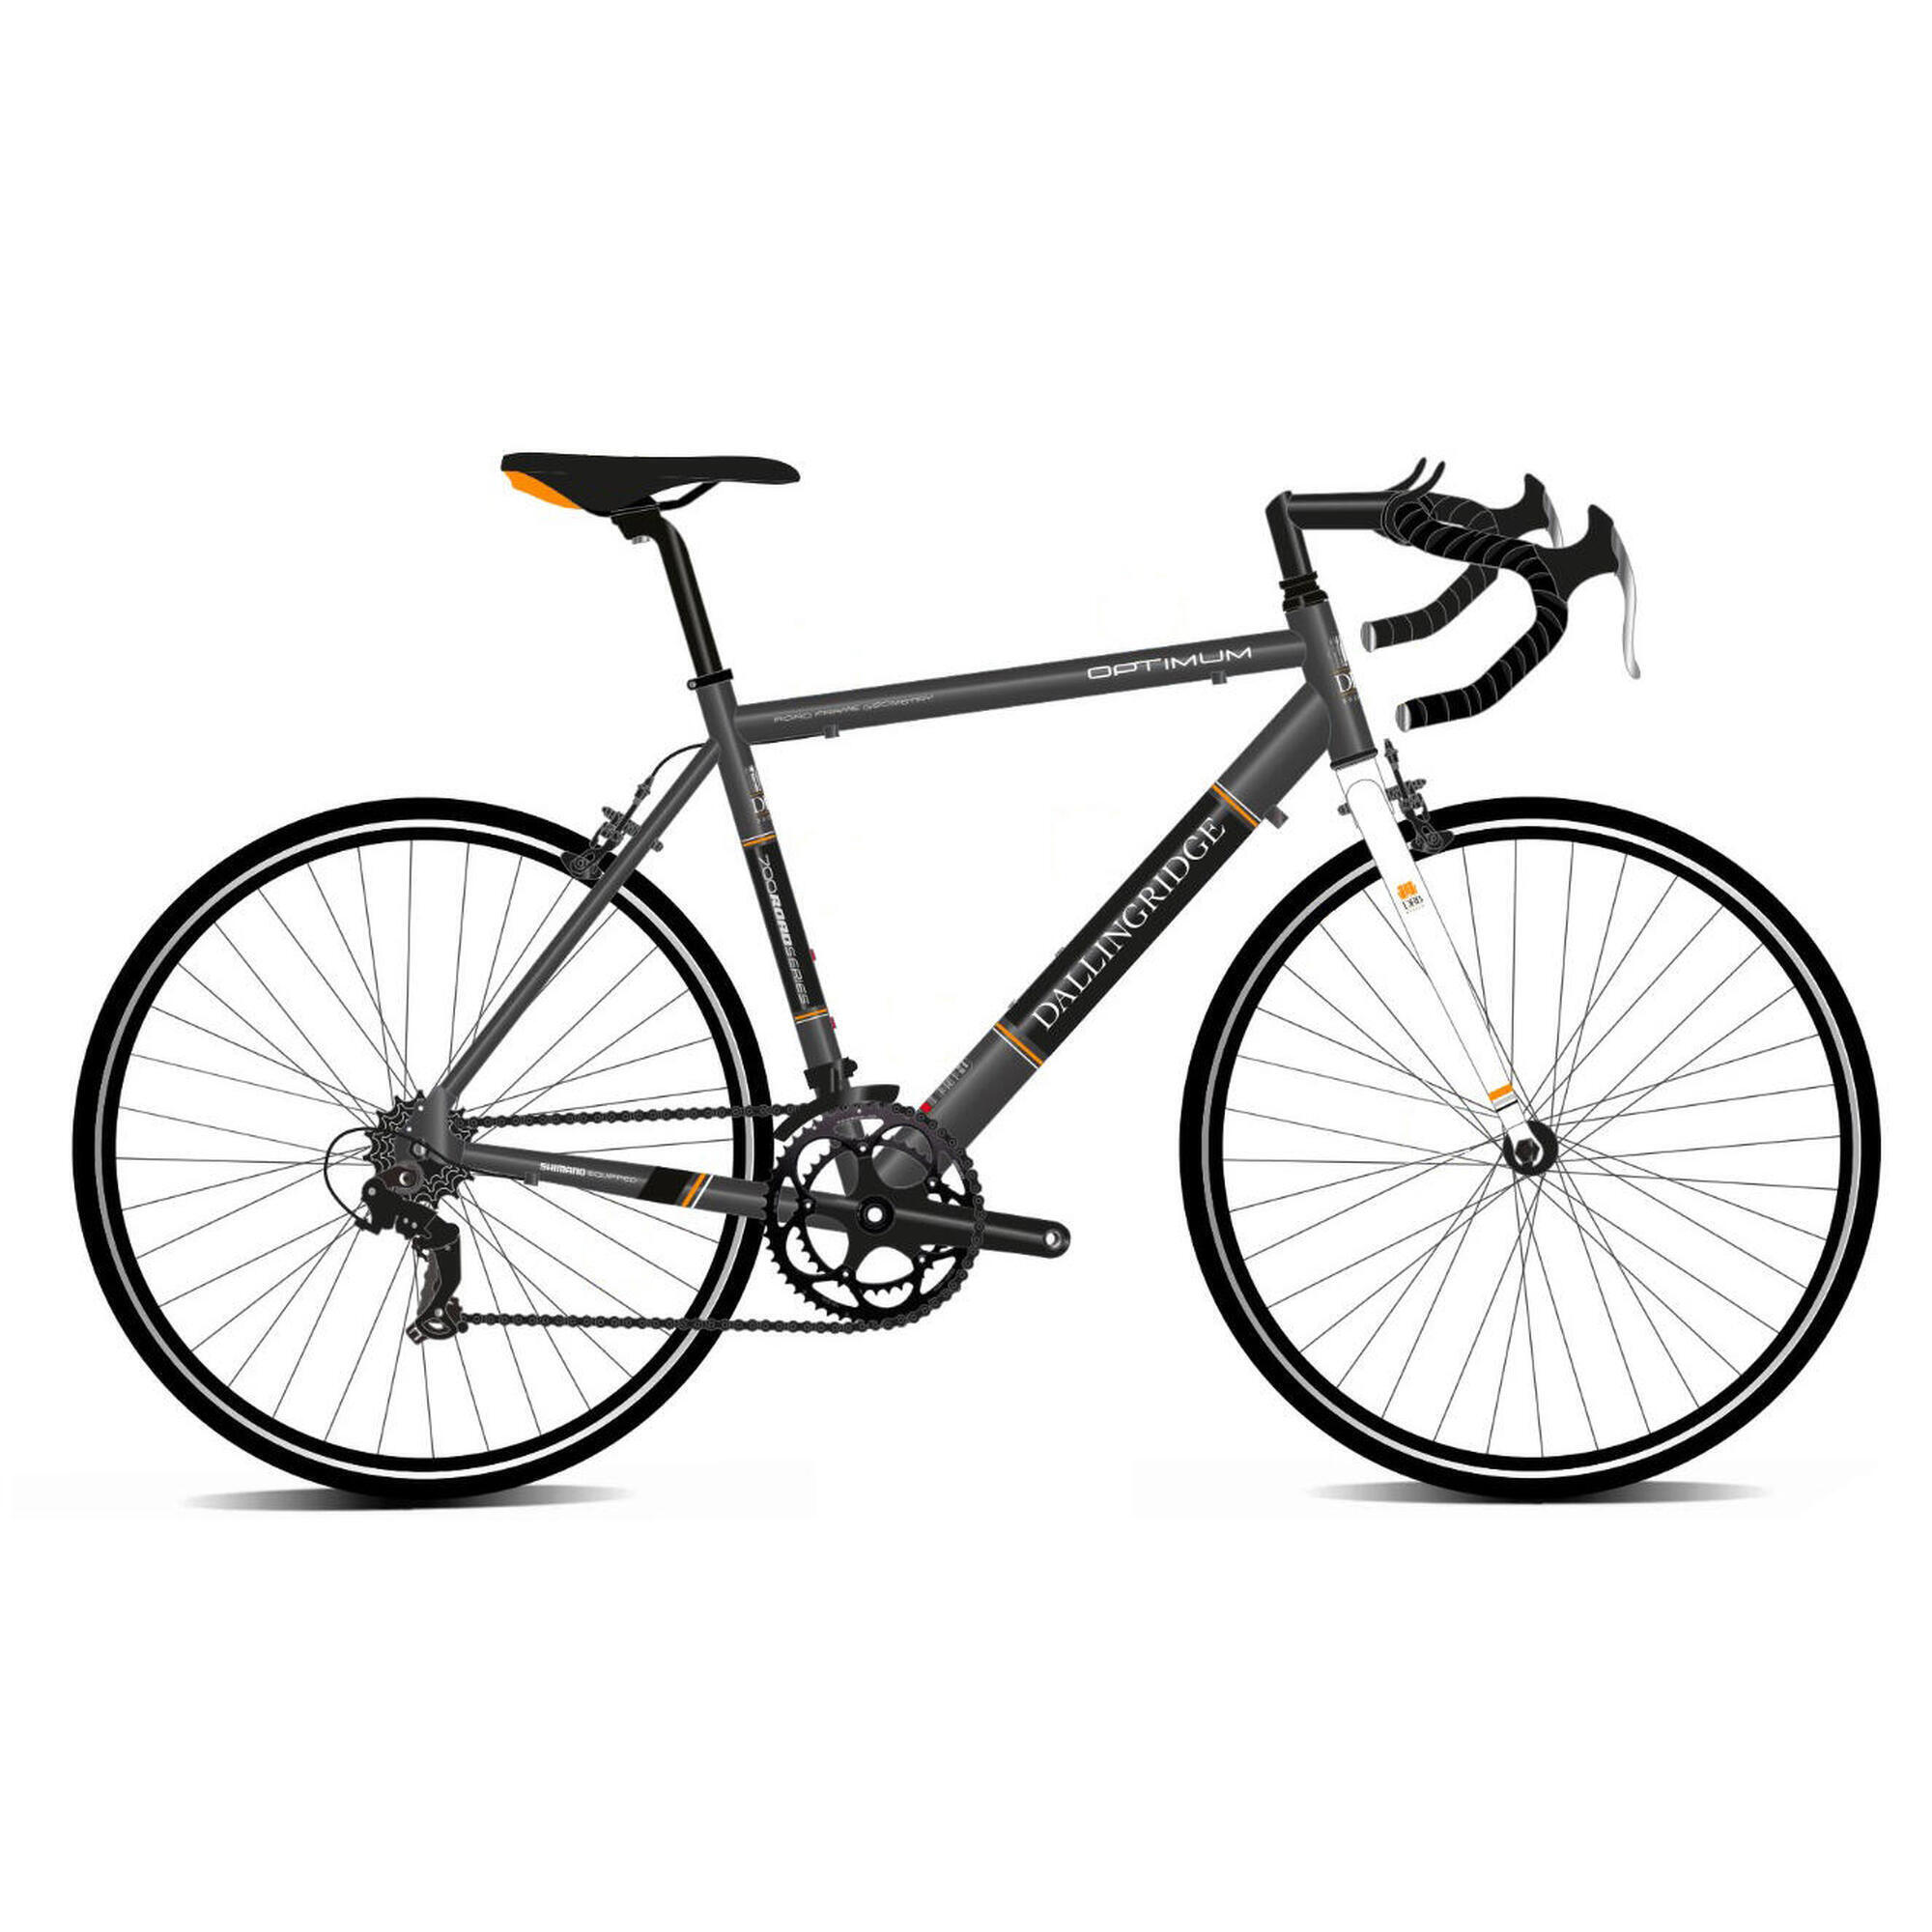 DALLINGRIDGE Dallingridge Optimum Unisex Road Bike, 700c Wheel - Gloss Grey/White